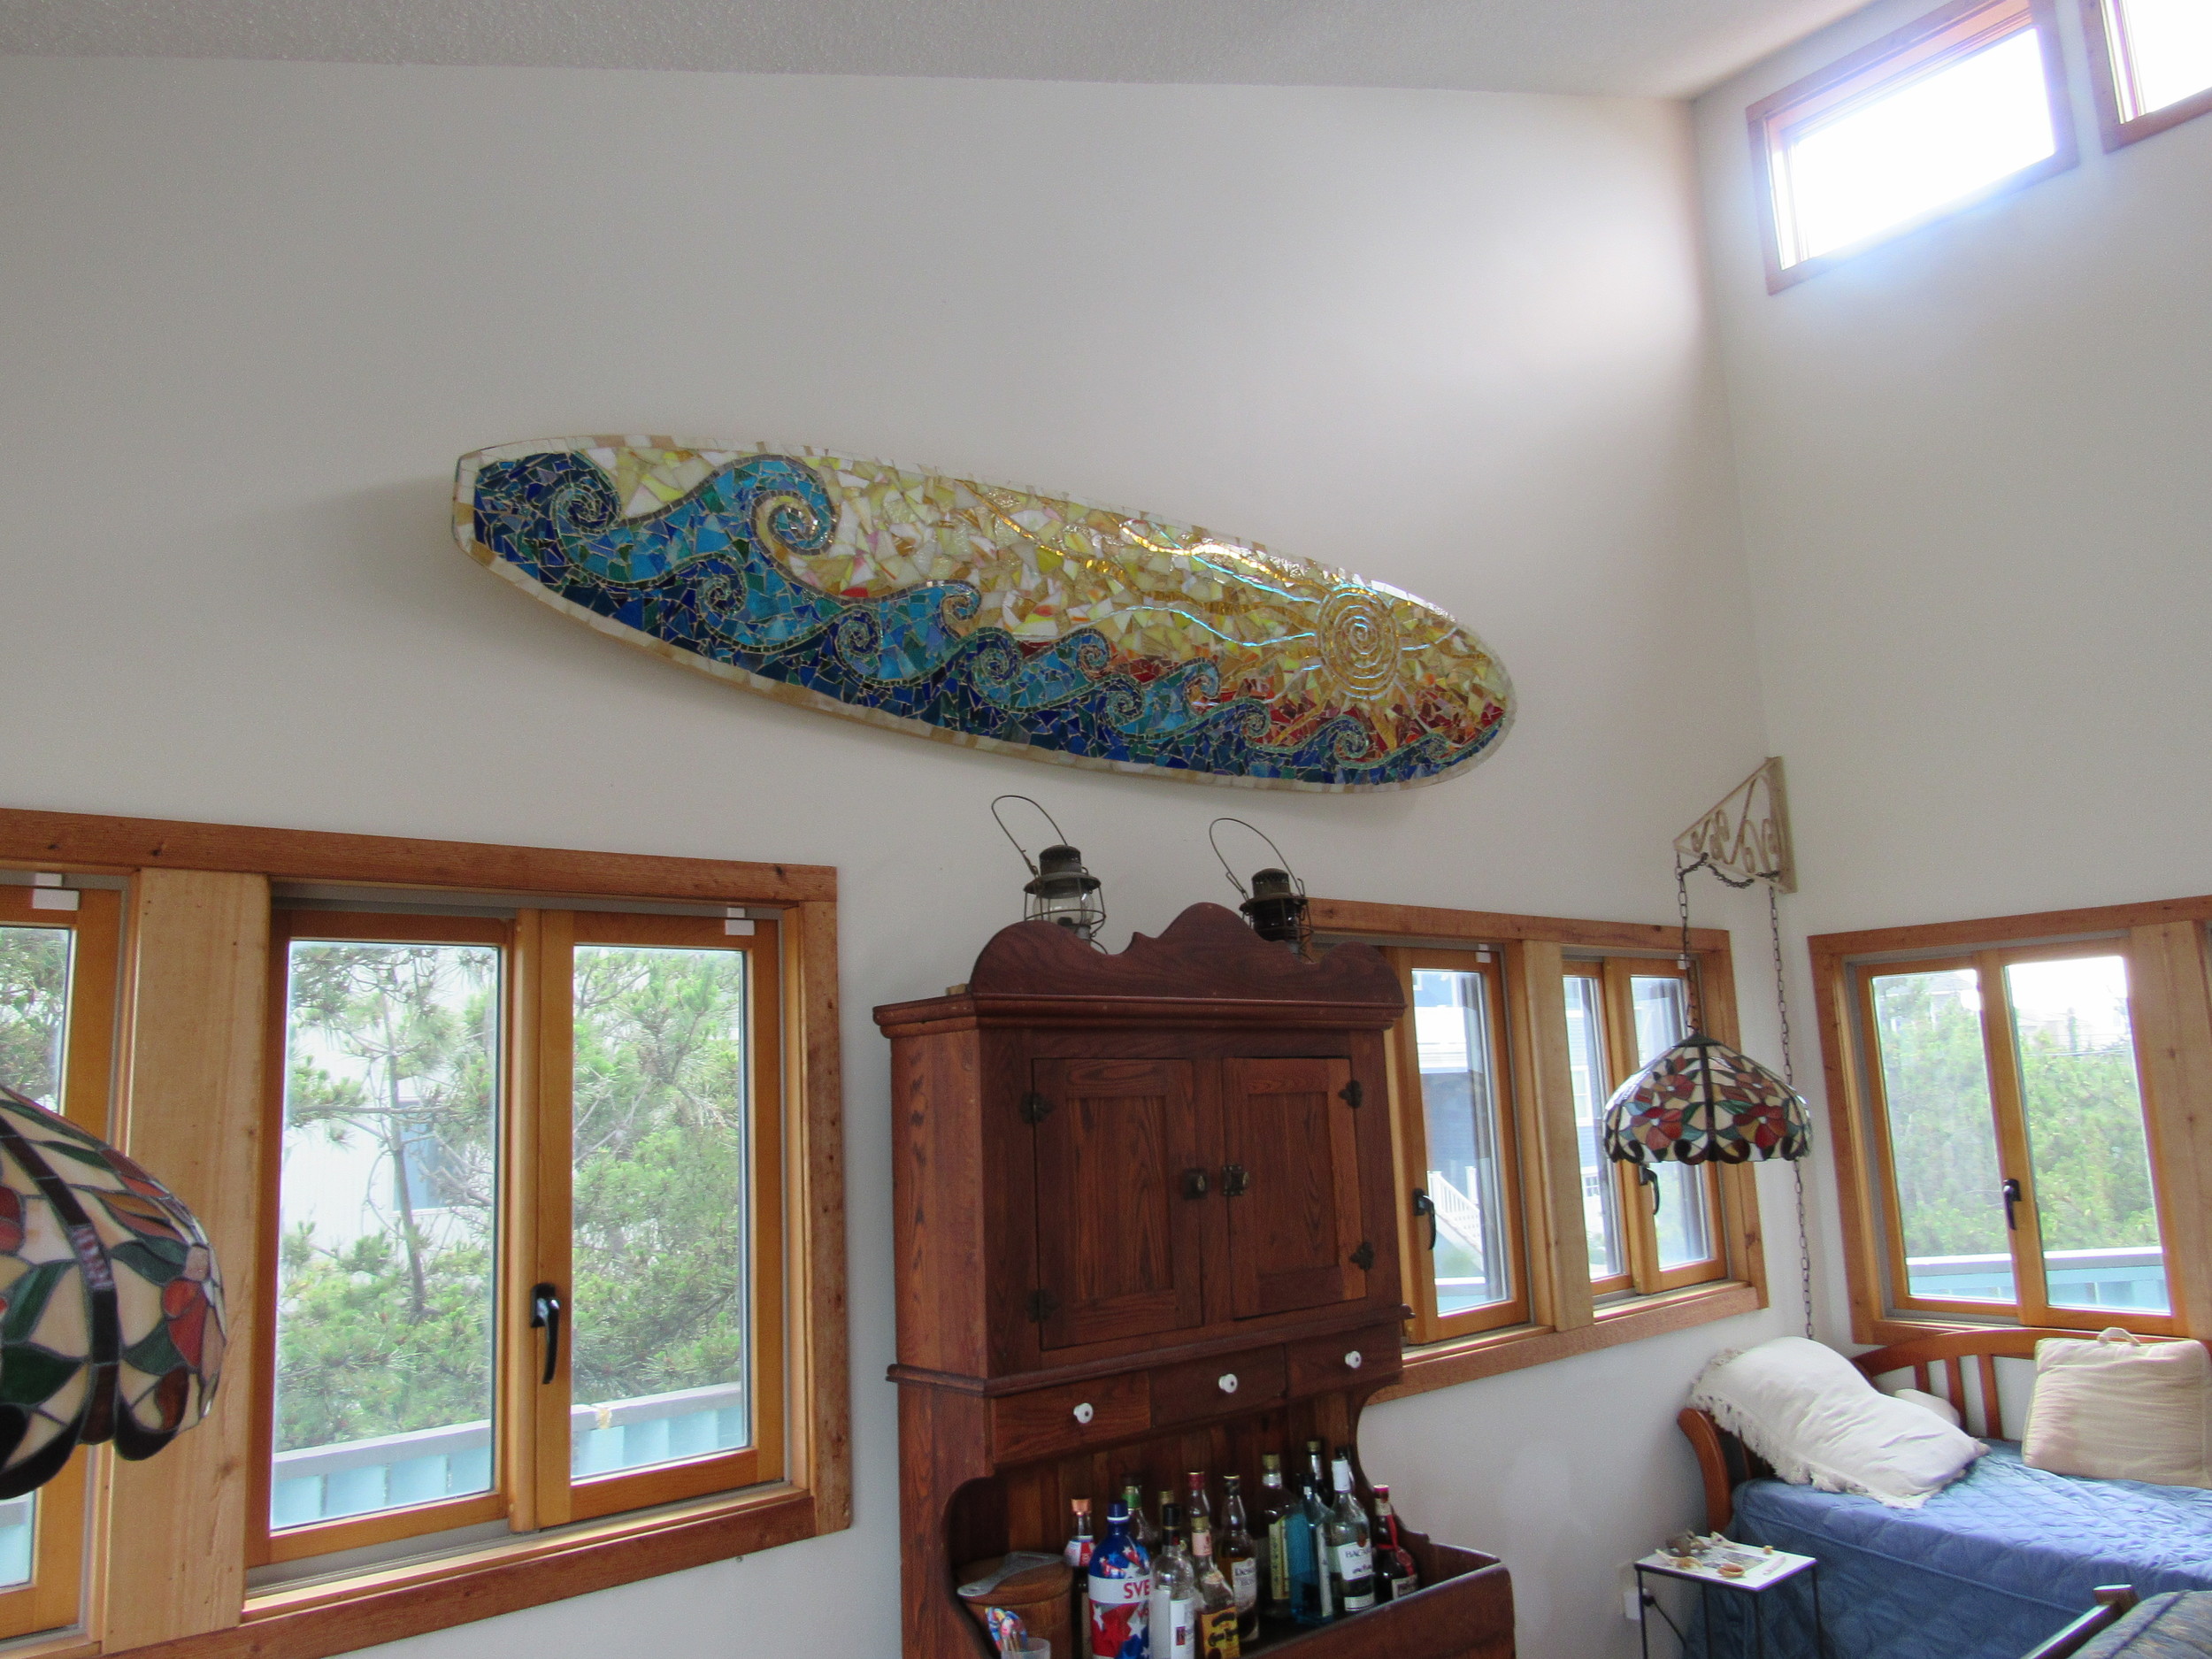  Beautiful custom surfboard mosaic in its home sweet home 